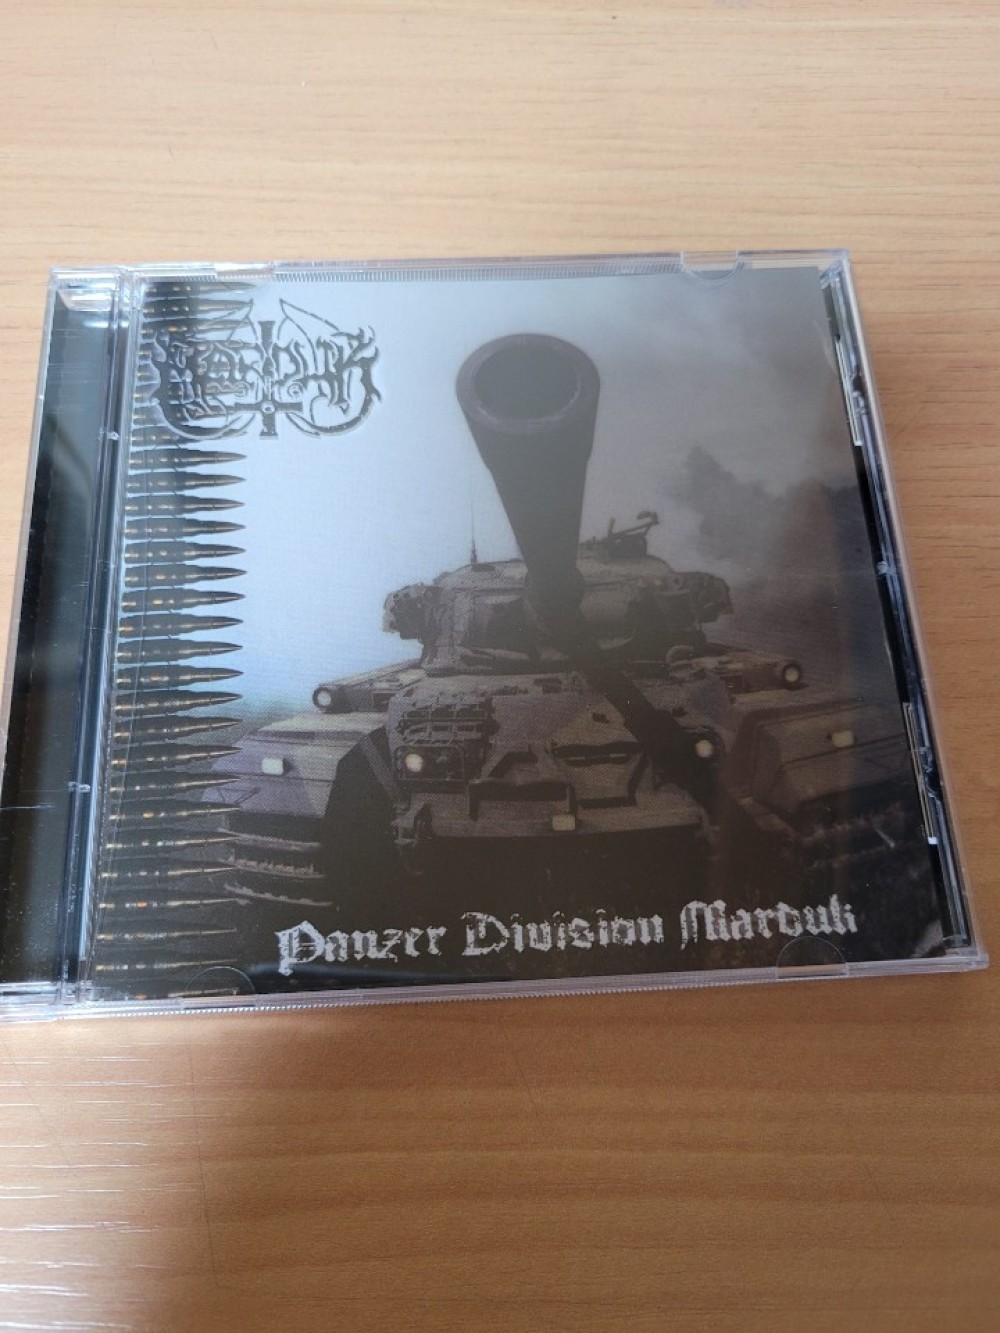 Marduk - Panzer Division Marduk CD Photo